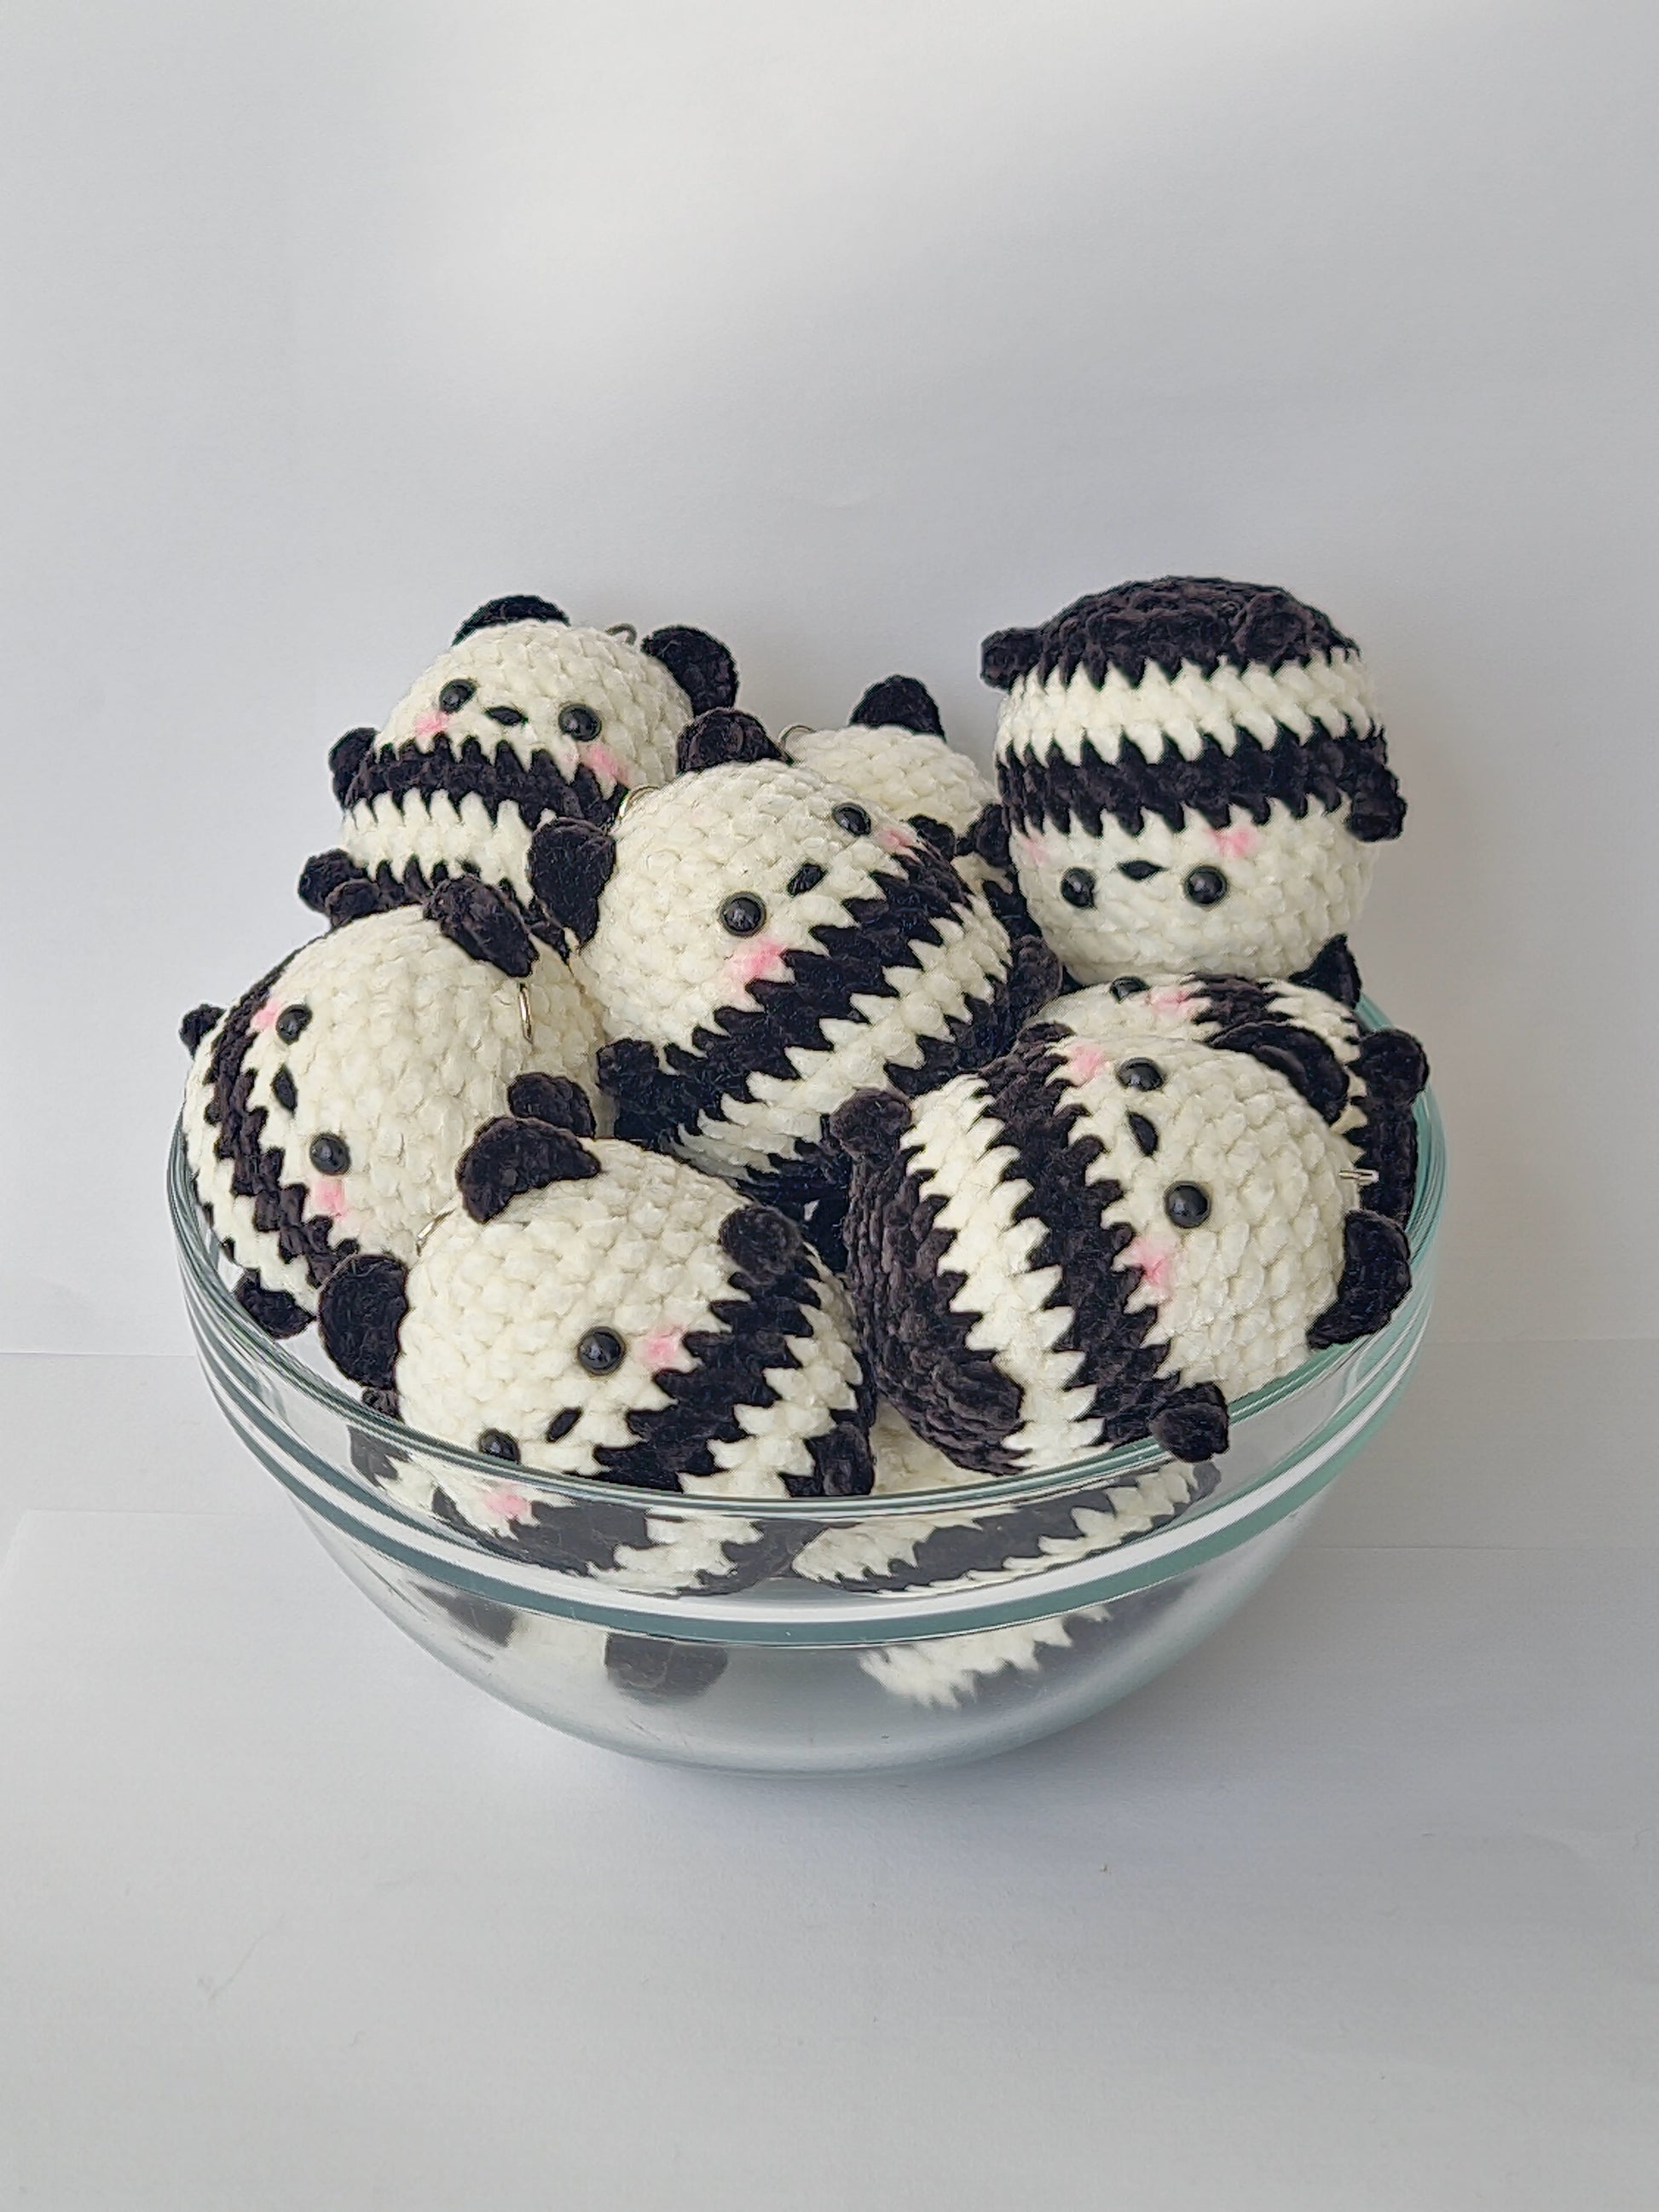 Large crochet animal keychain – Kitty's